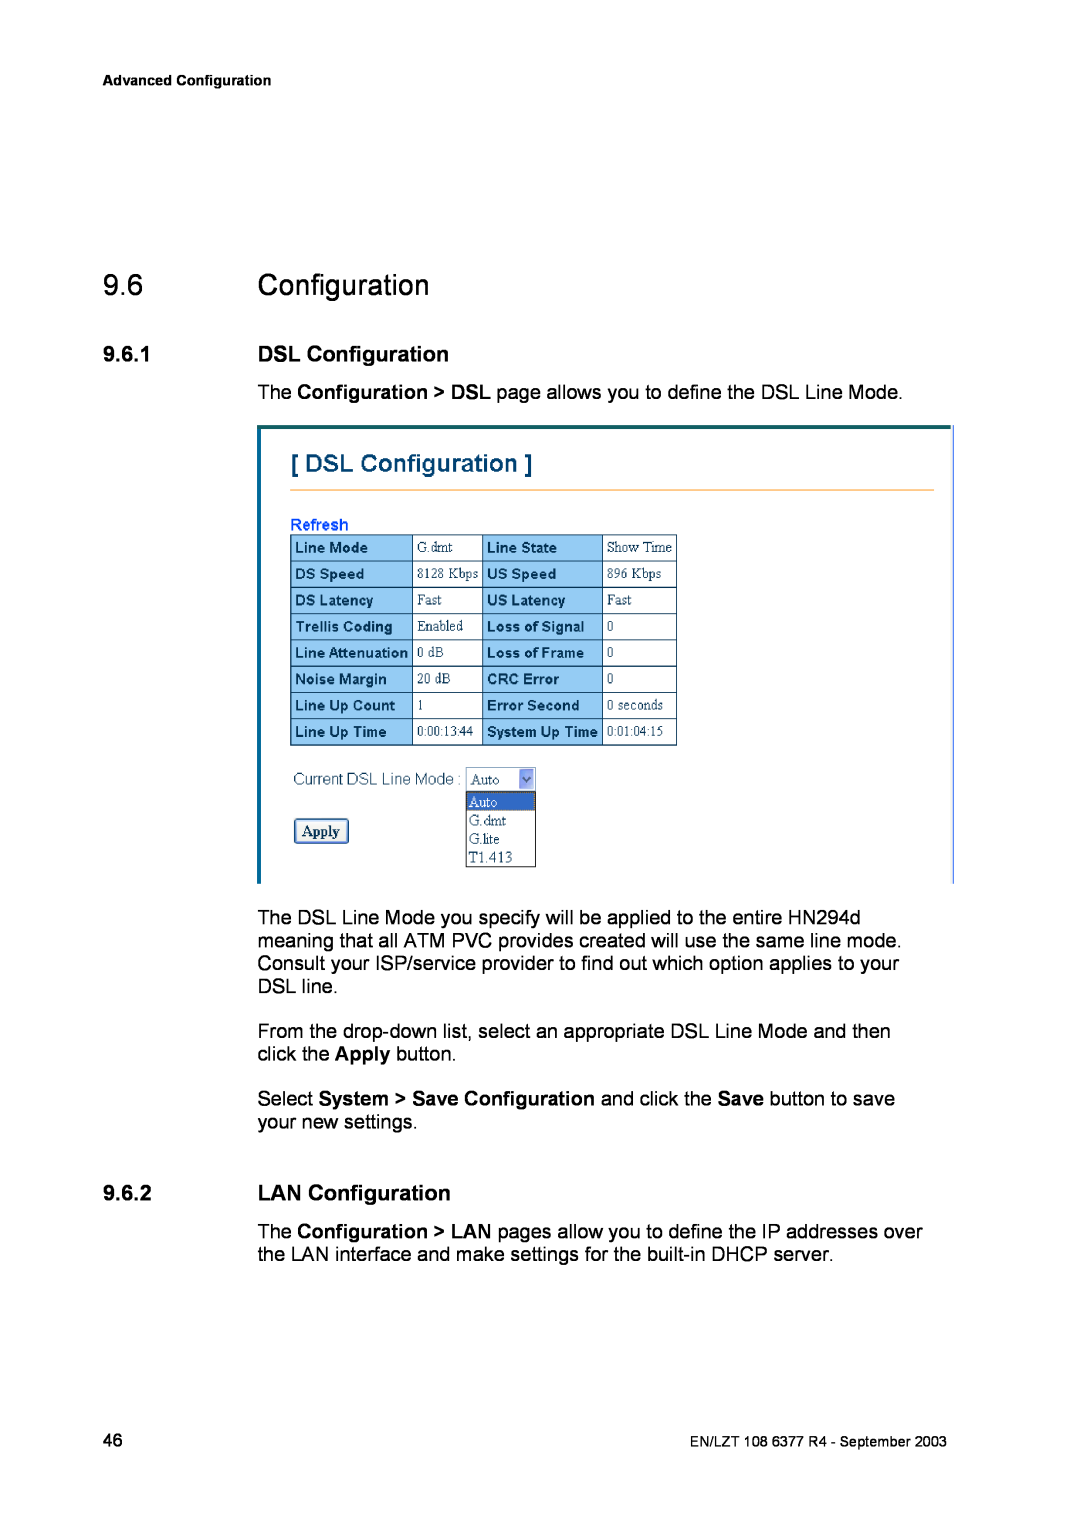 Garmin HN294DP/DI manual DSL Configuration, LAN Configuration 